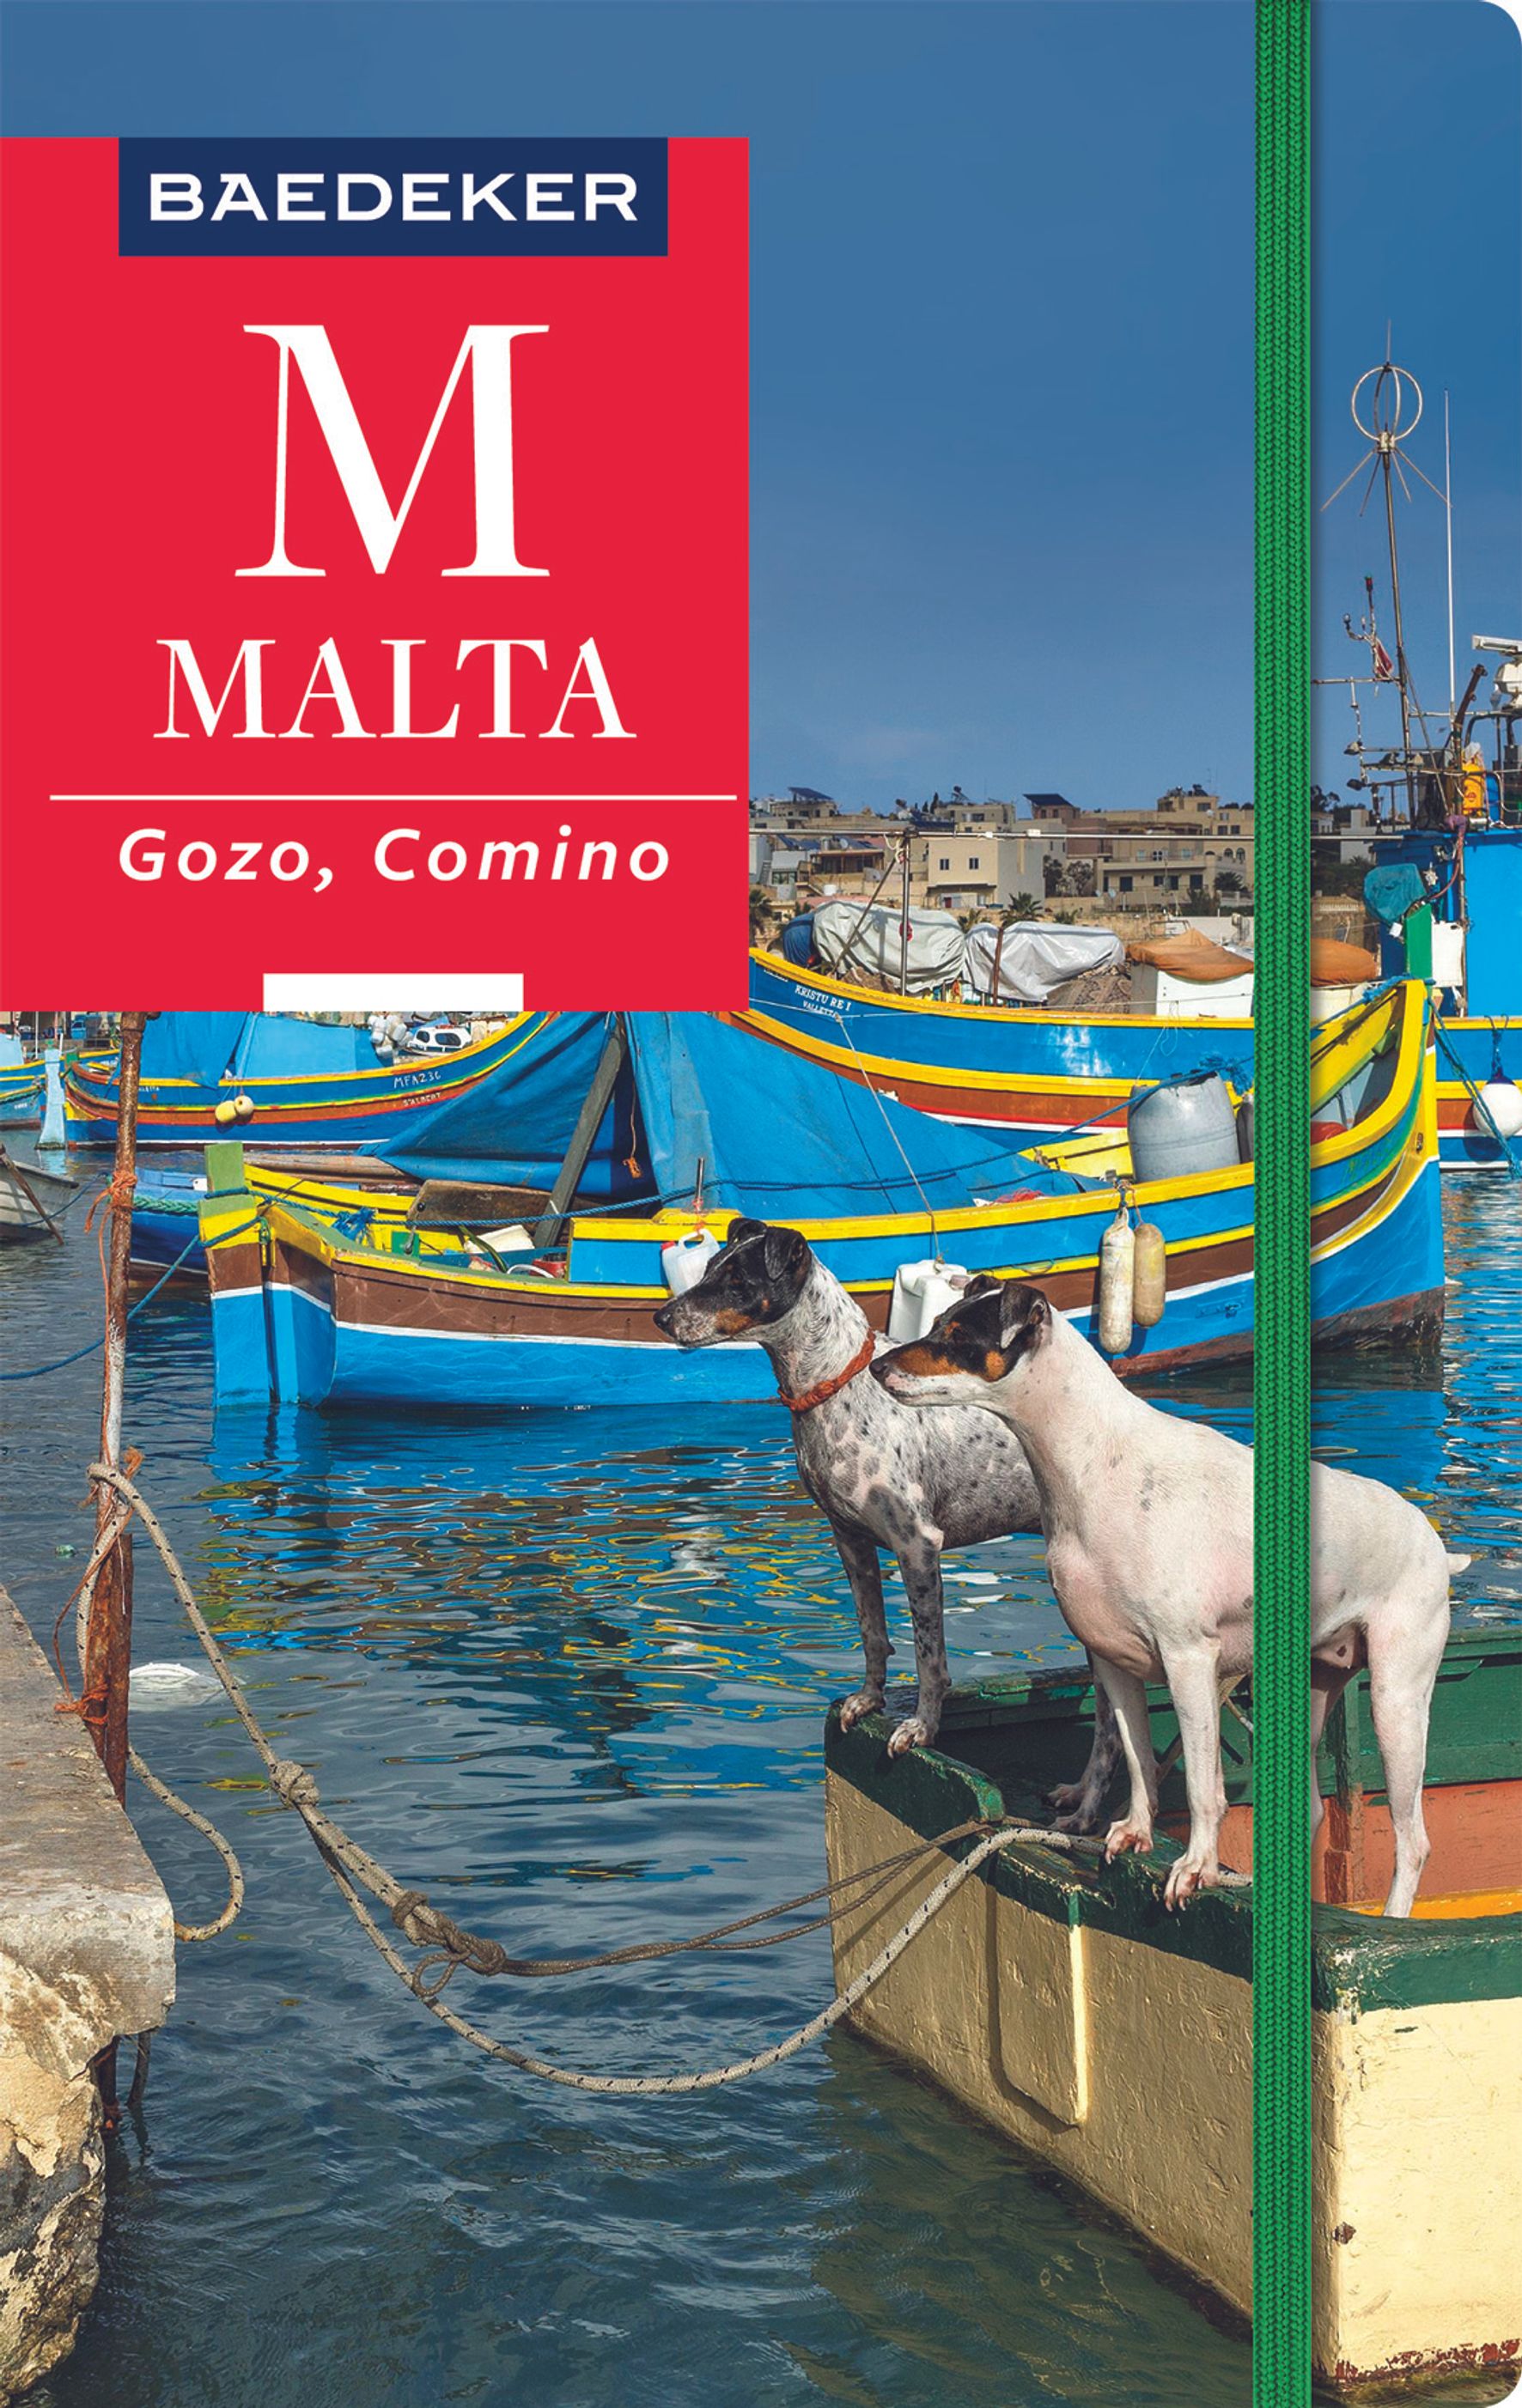 Baedeker Malta, Gozo, Comino (eBook)